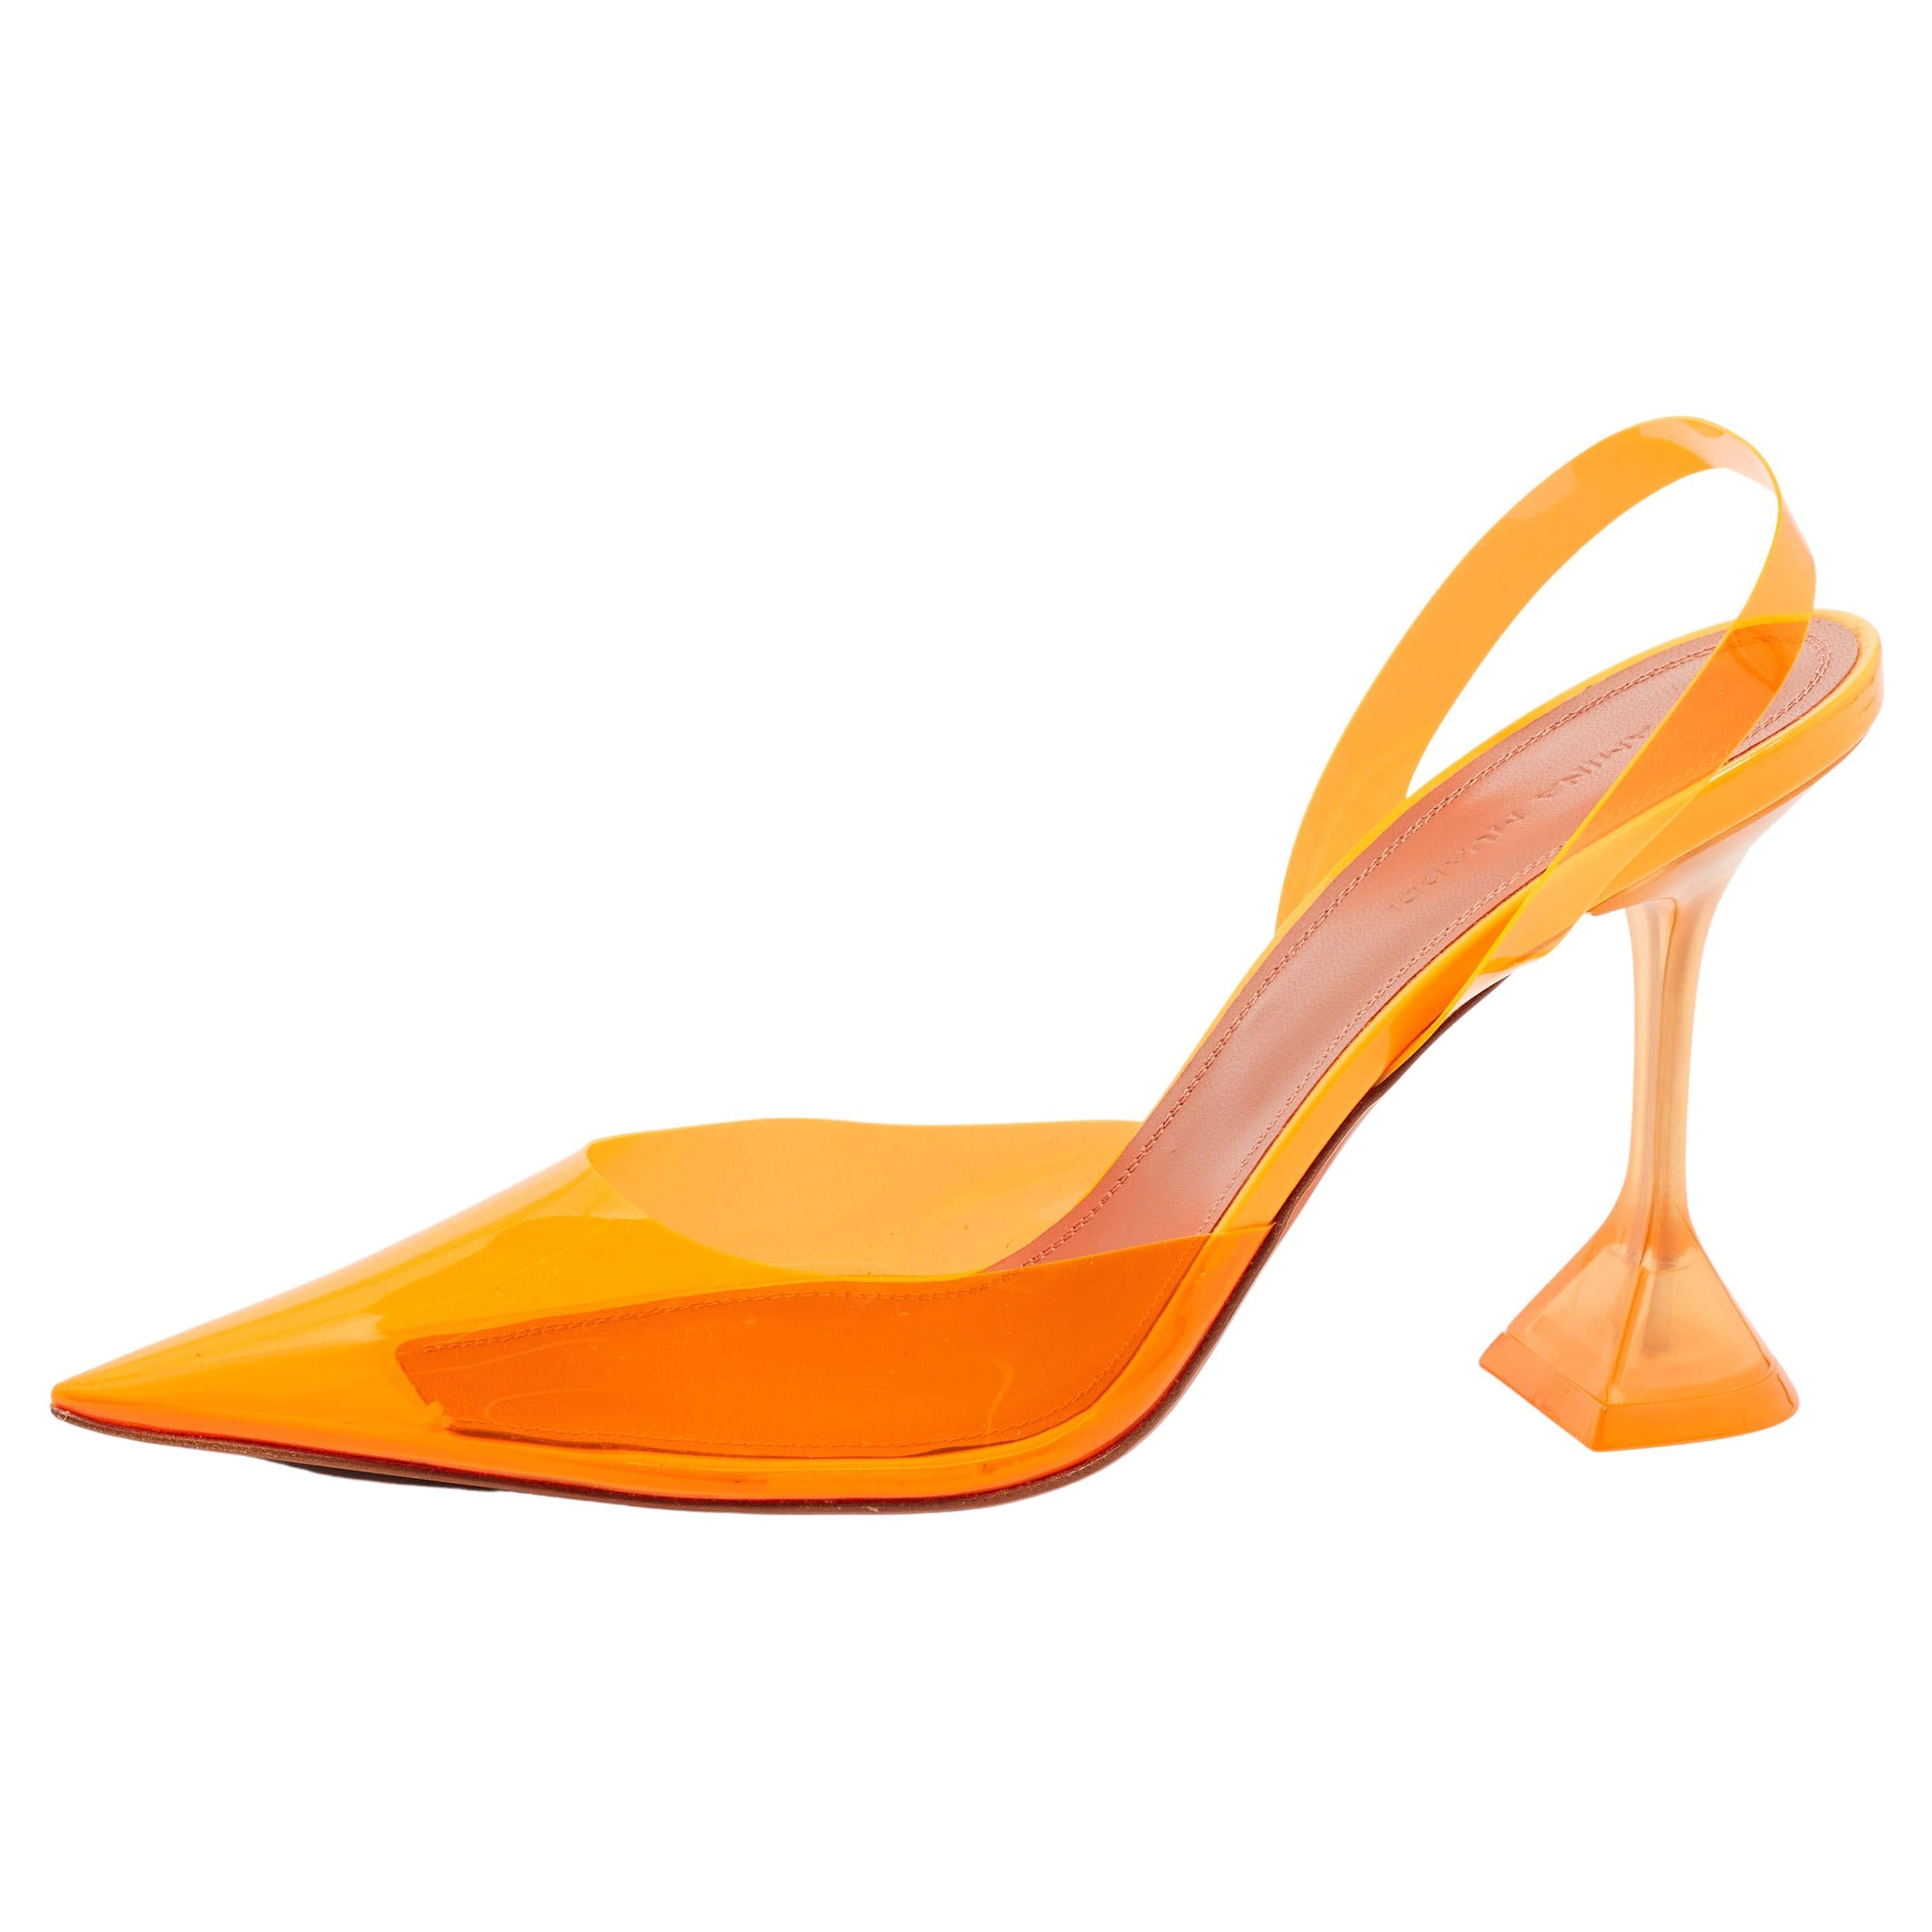 Amina Muaddi escarpins Holli en verre orange avec bride arrière en PVC, taille 40,5